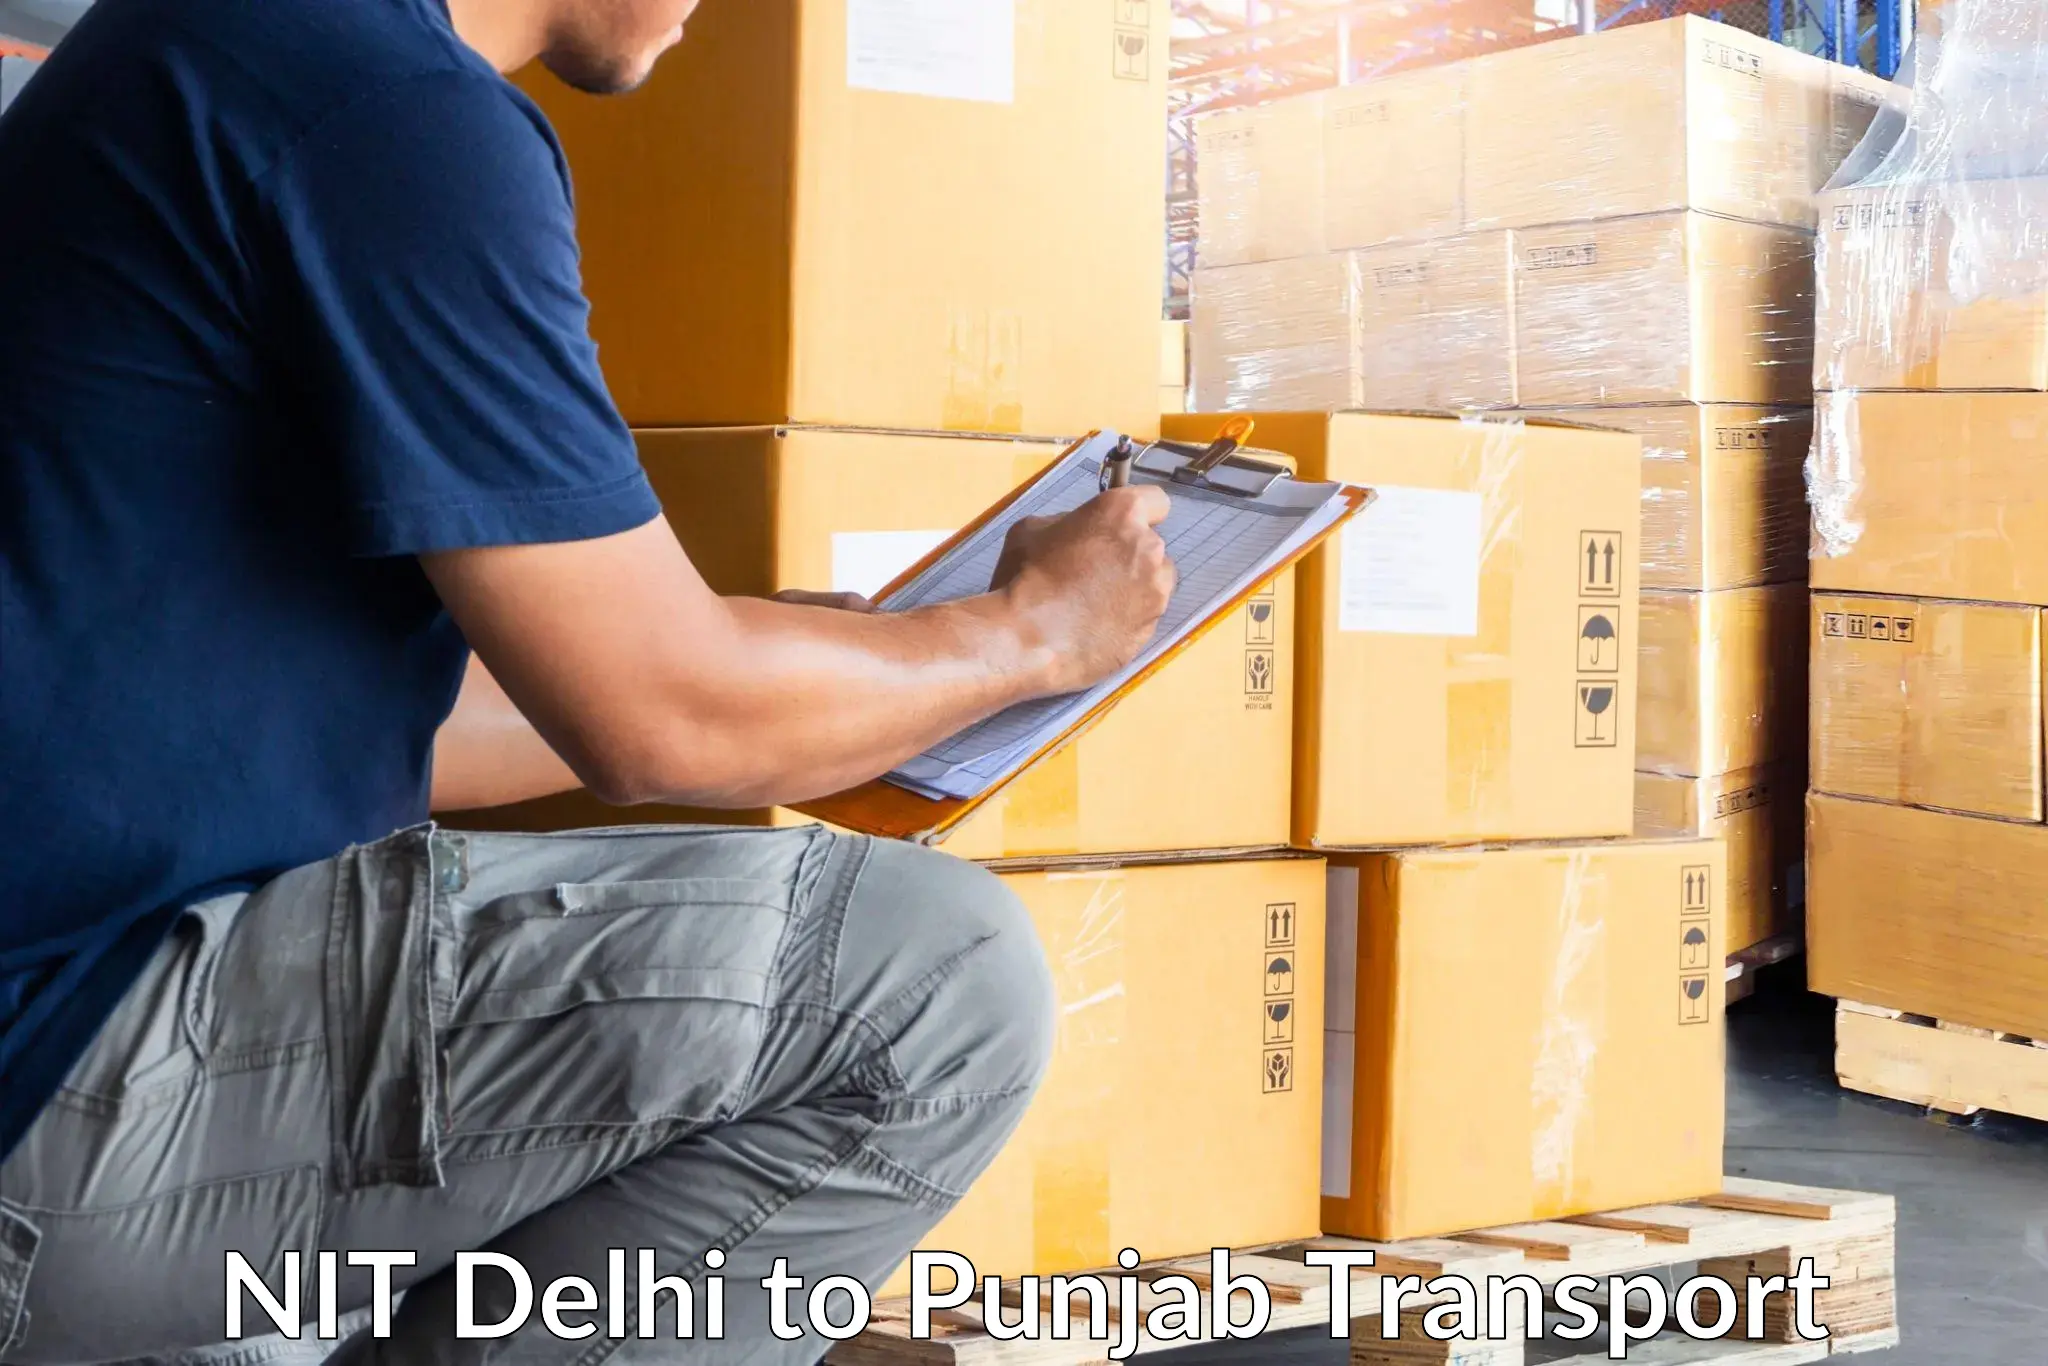 Shipping partner NIT Delhi to Malout